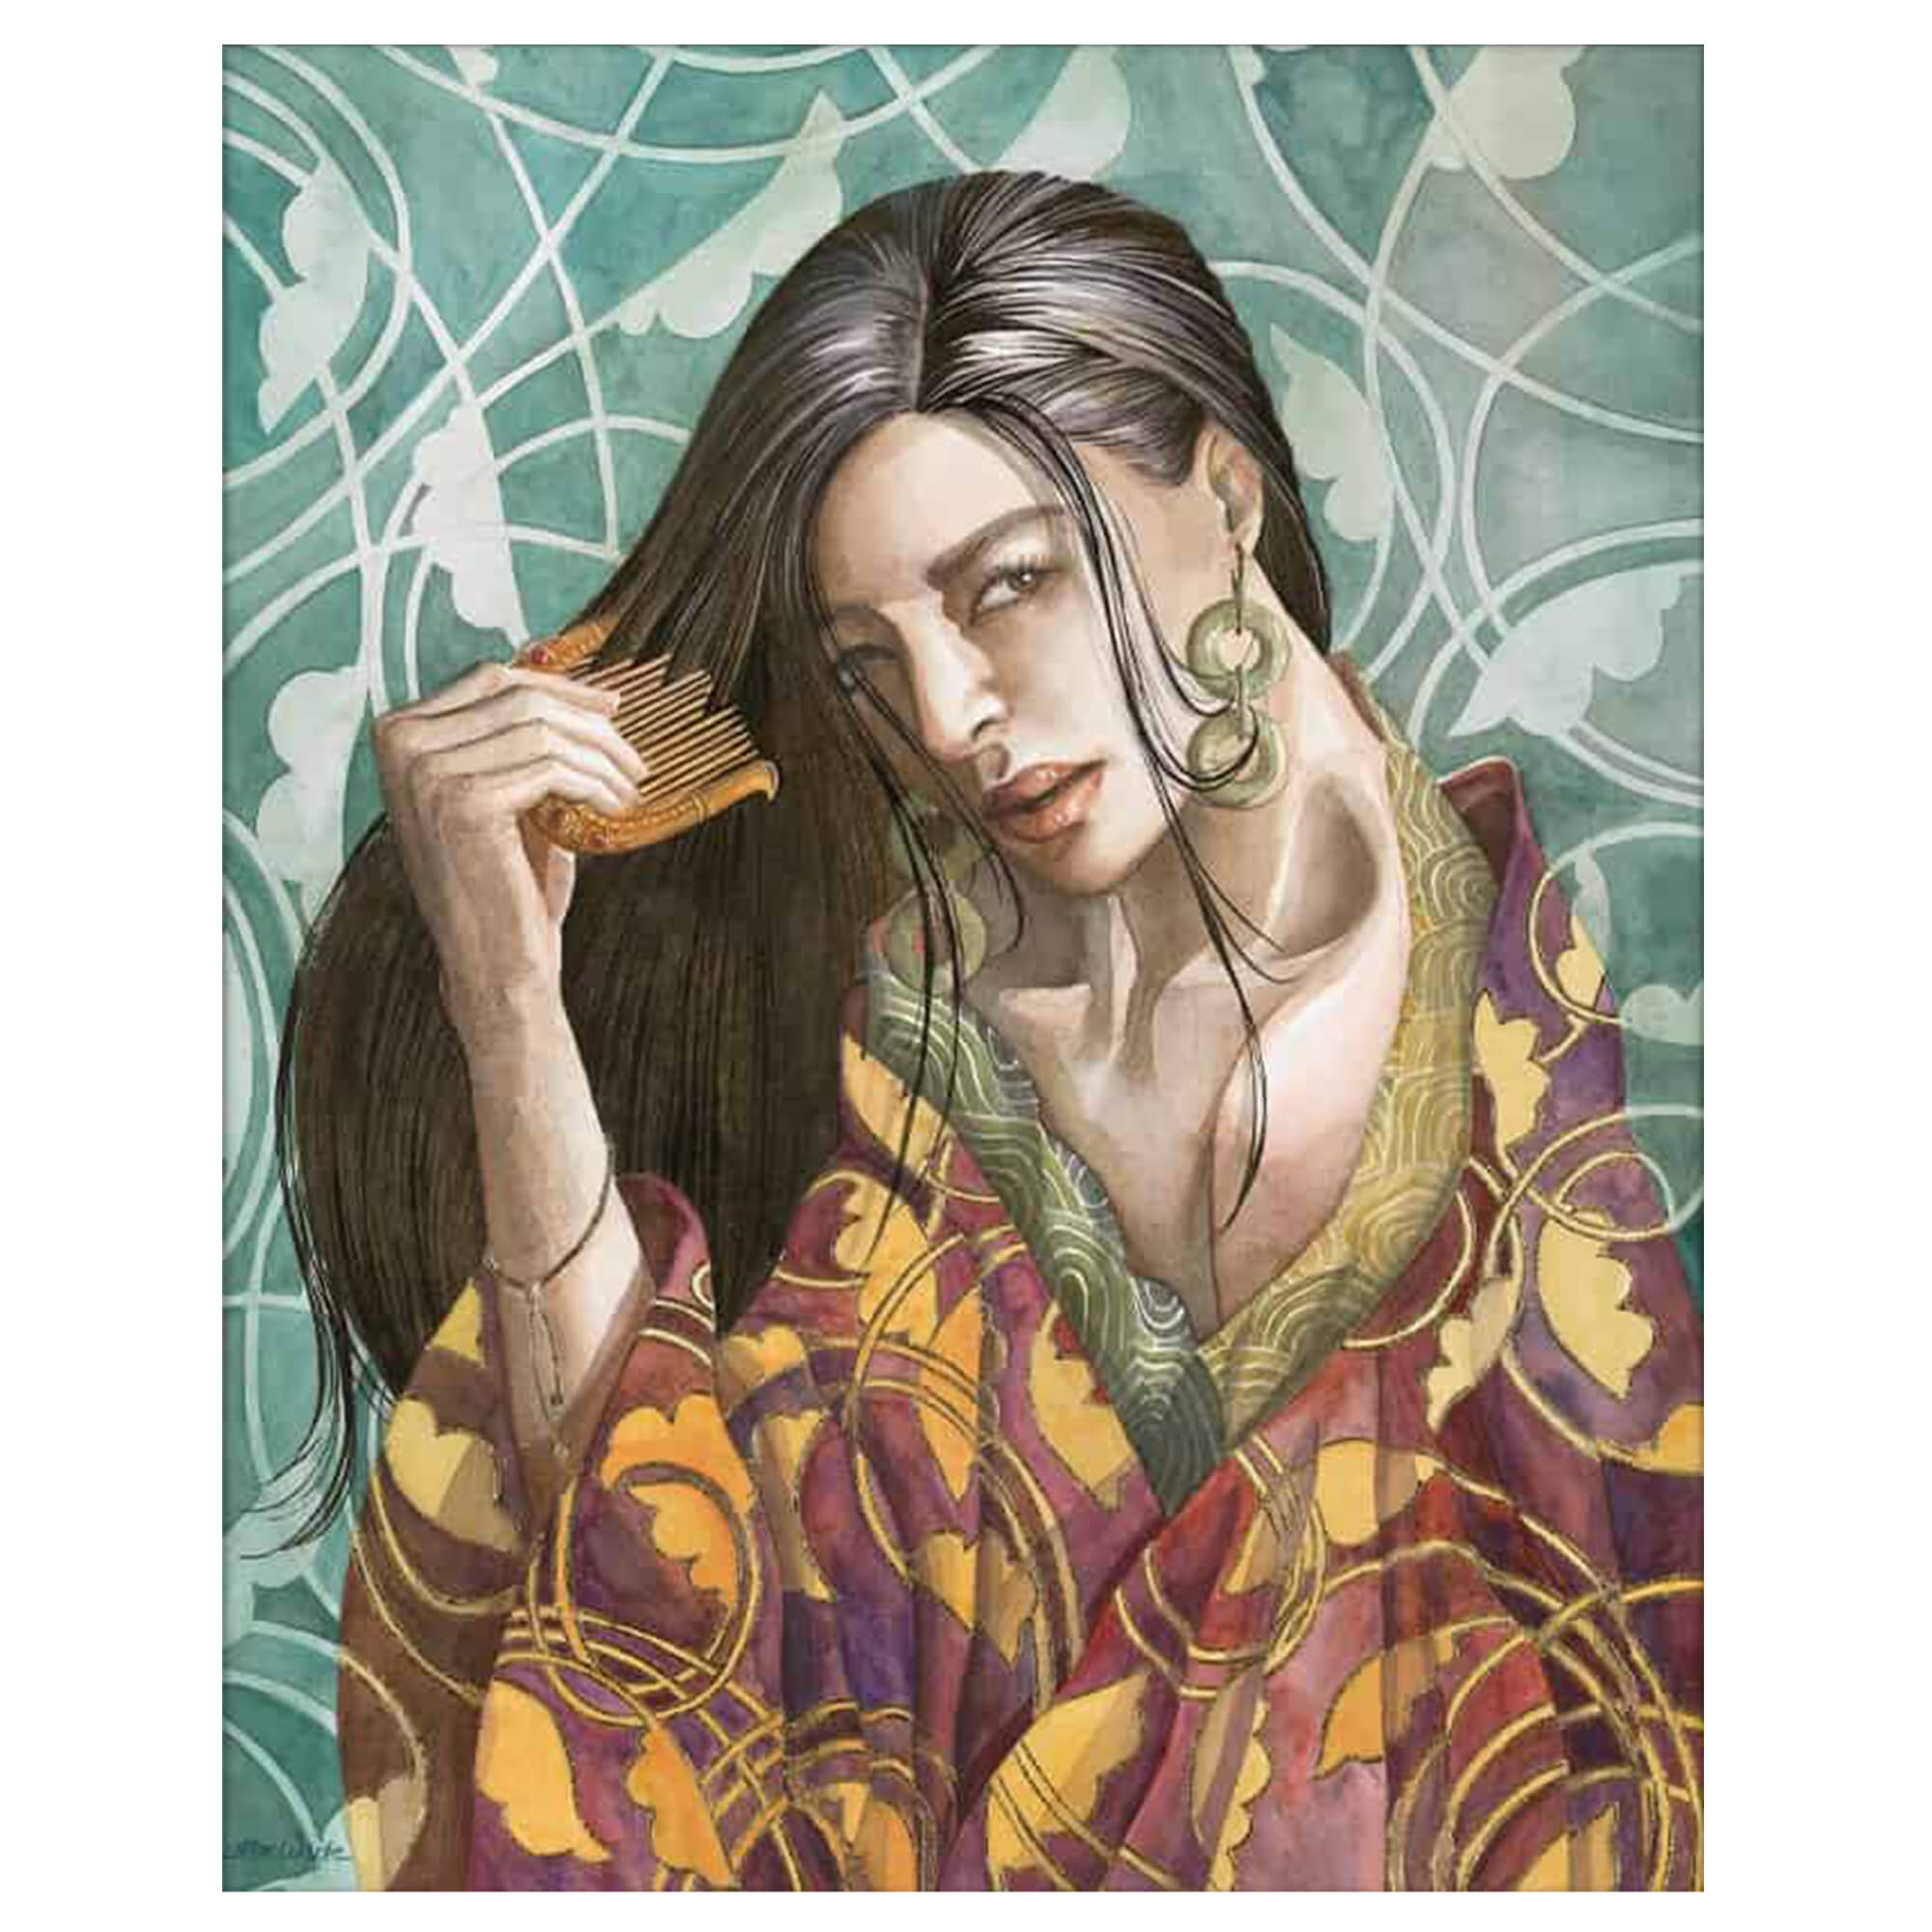 A matted art print of a woman combing her long, dark hair by Hawaii artist Mae Waite